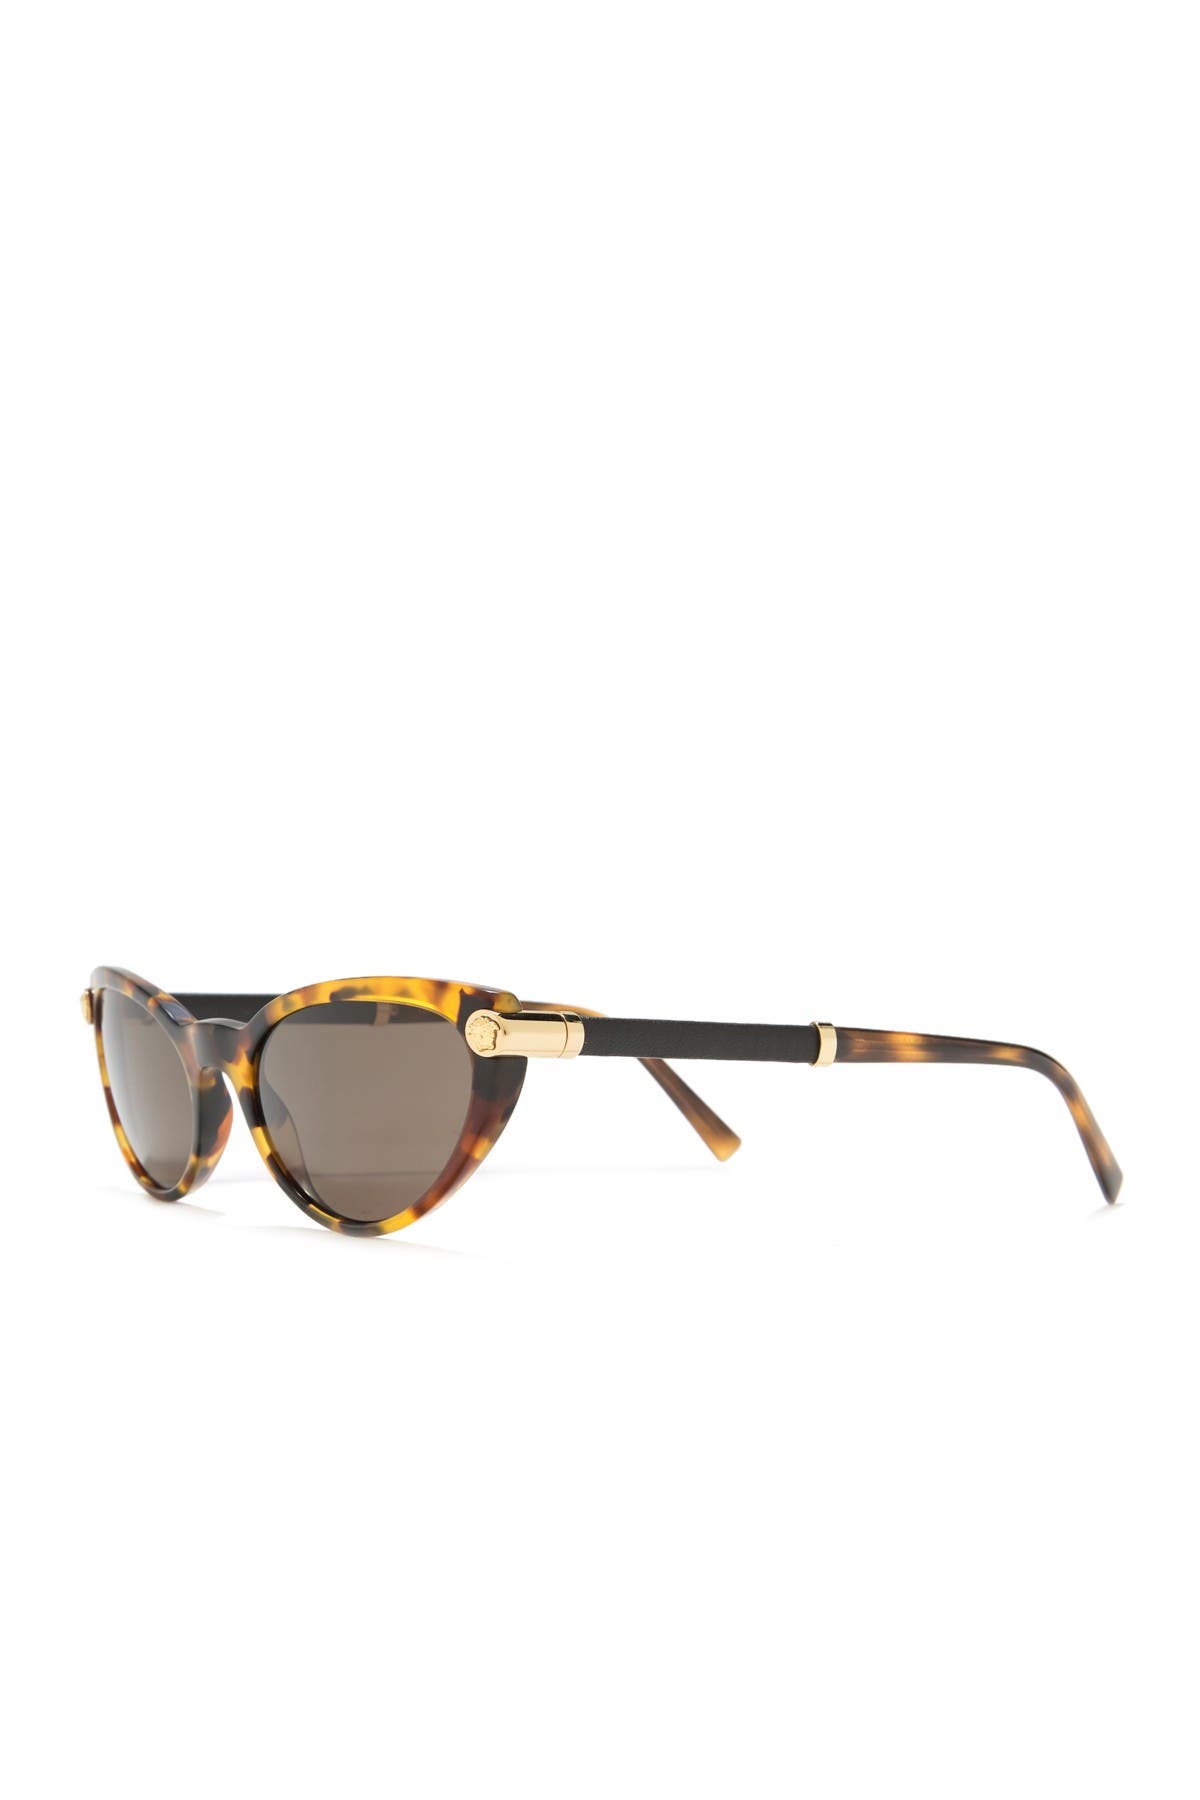 Versace | 54mm Cat Eye Sunglasses | Nordstrom Rack